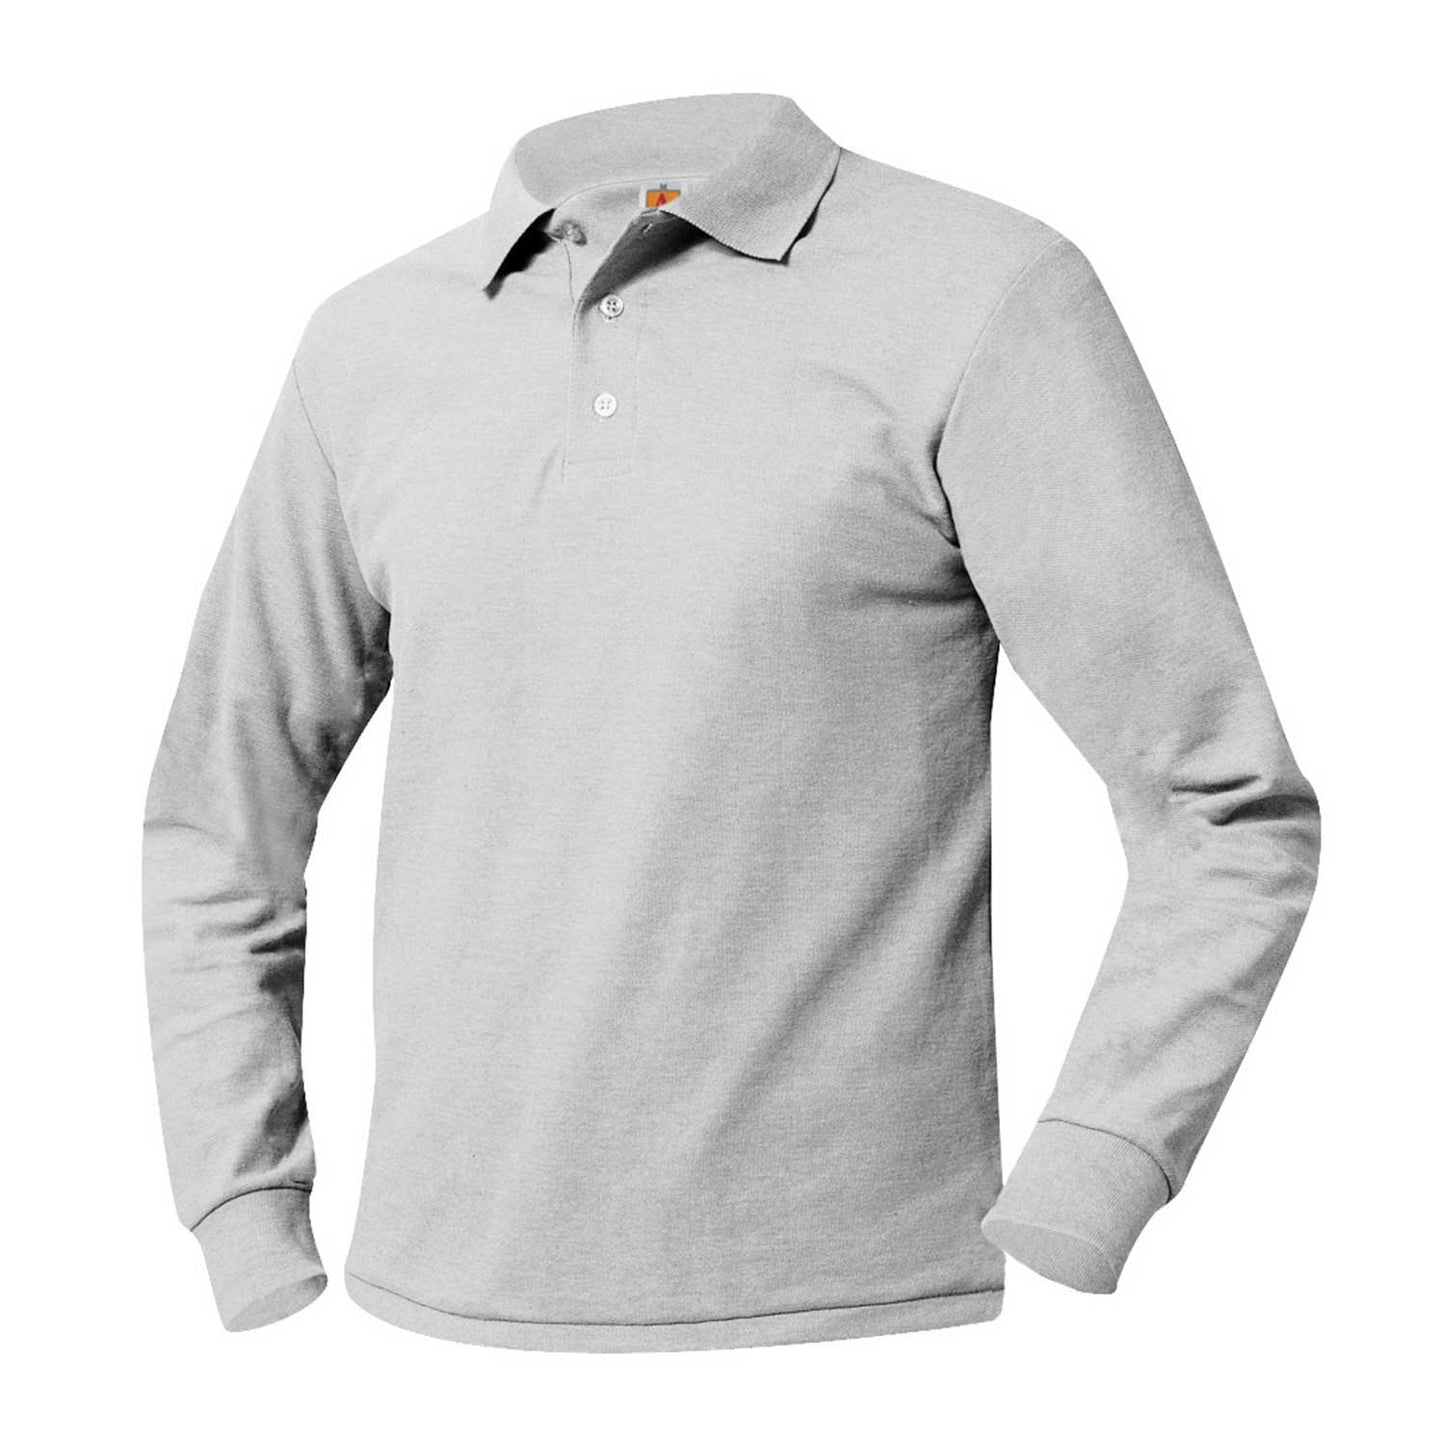 Unisex Pique Polo Shirt, Long Sleeves, Ribbed Cuffs w/Logo - 1105